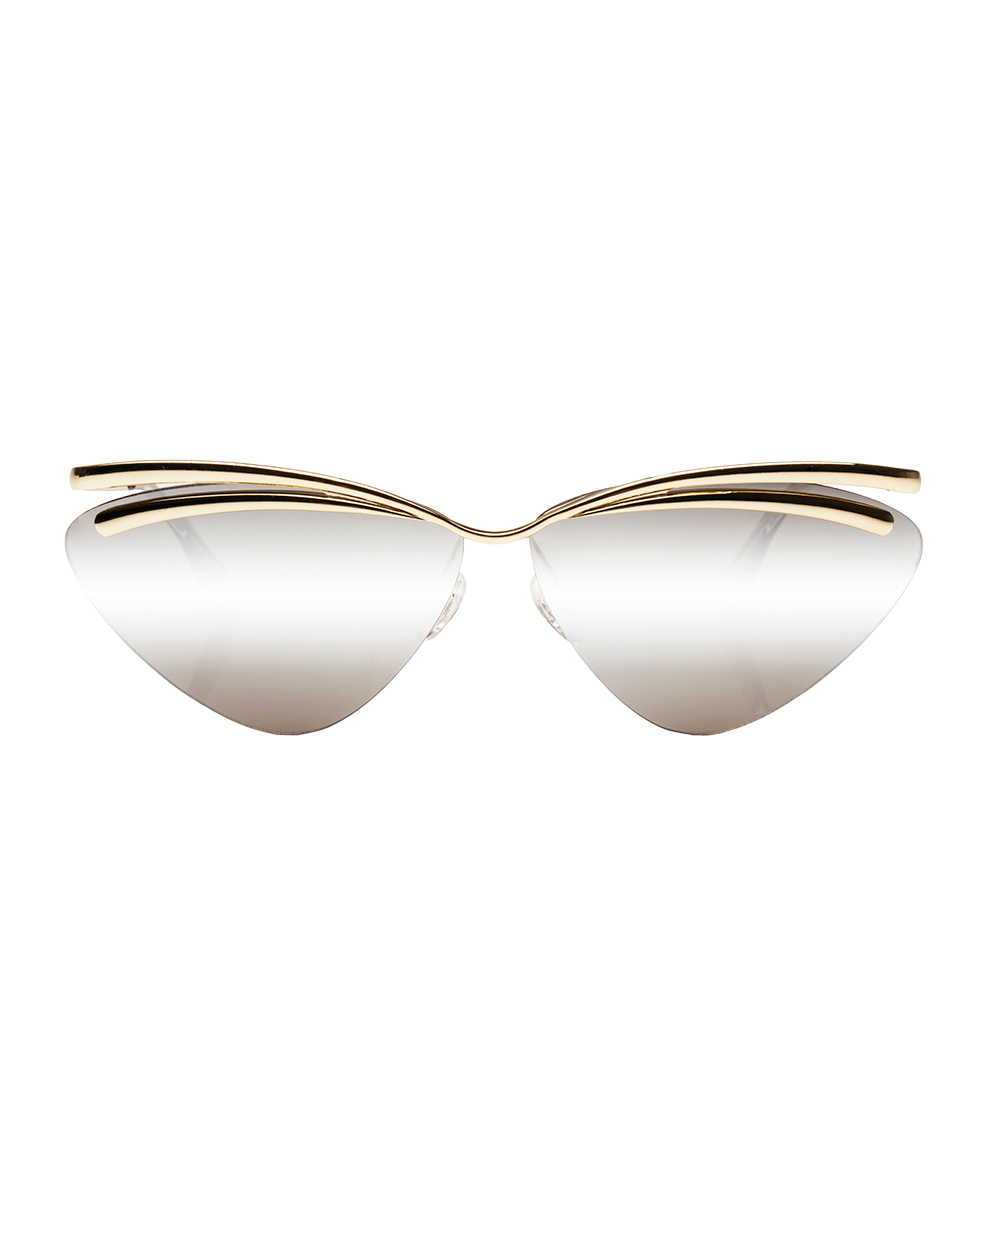 Le Specs sunglasses, $139